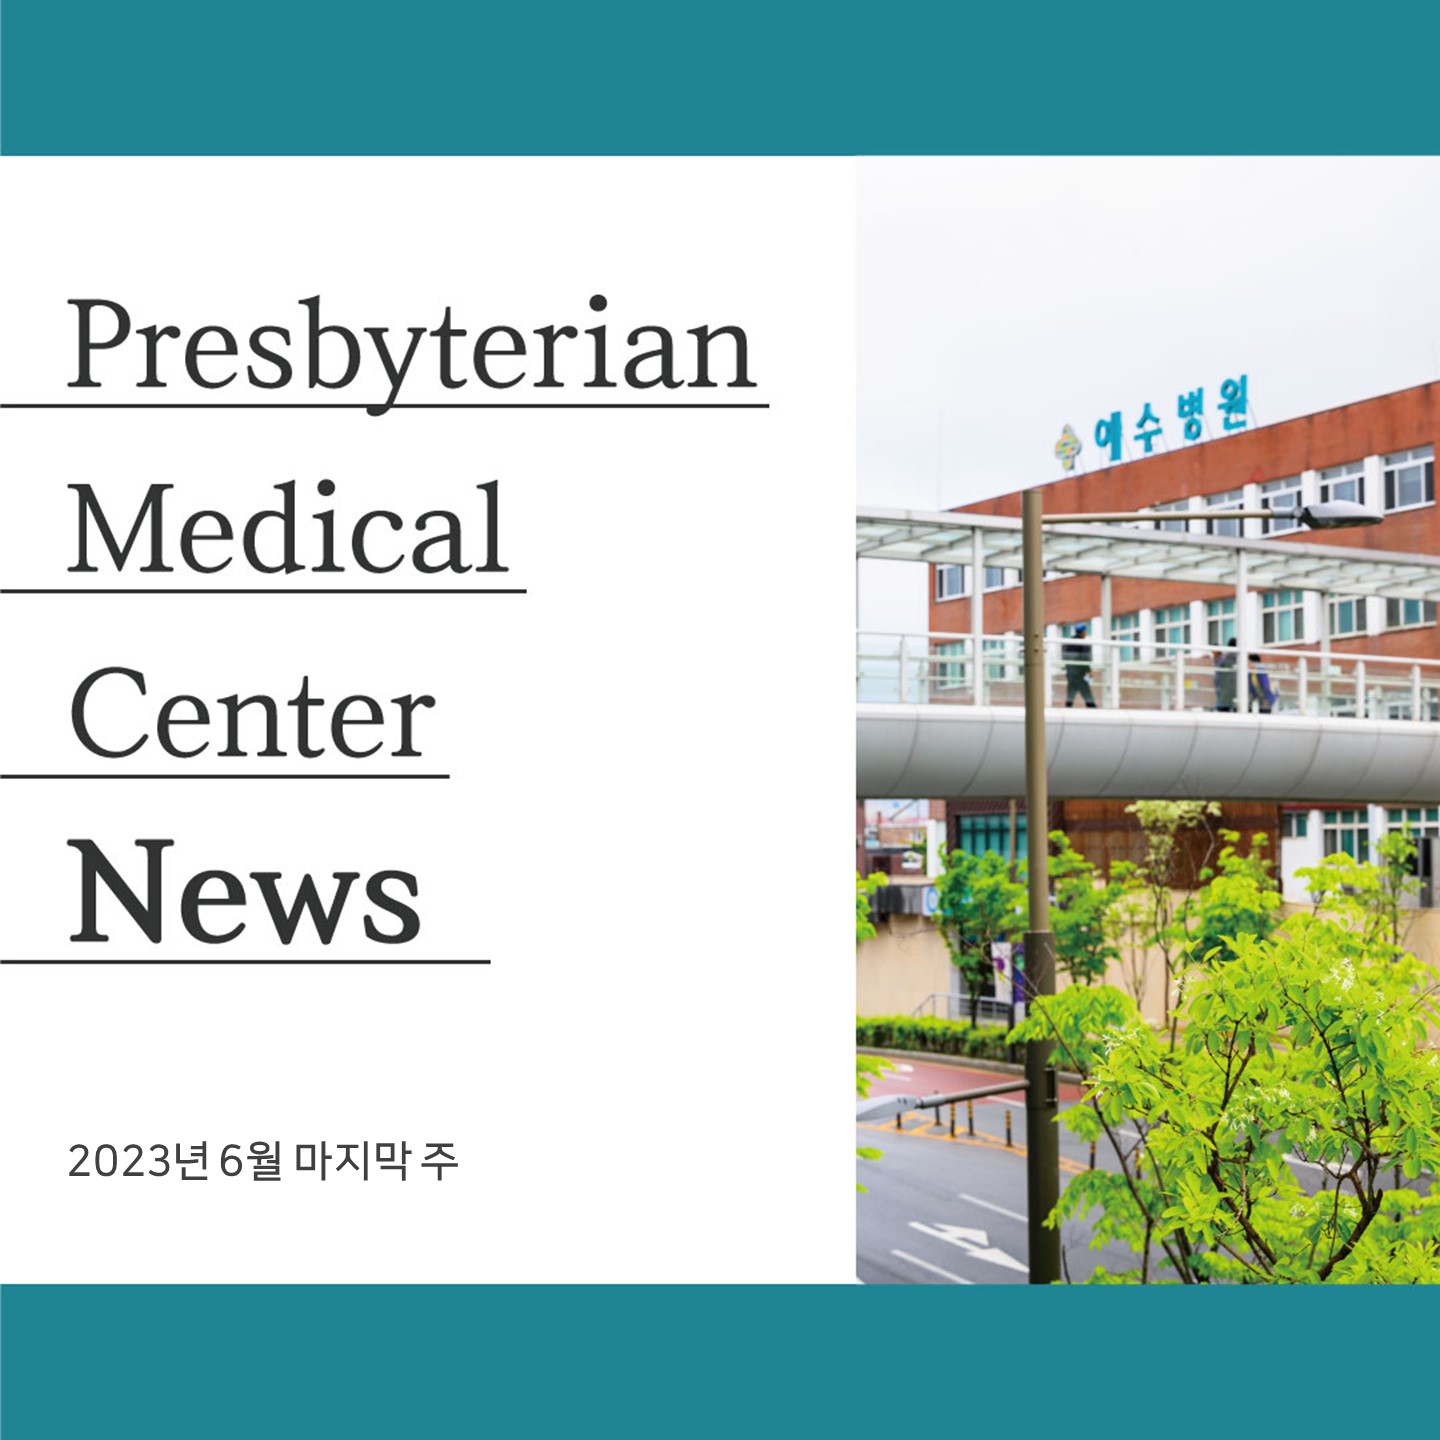 Presbyterian Medical
Center
News
2023년 6월 마지막 주